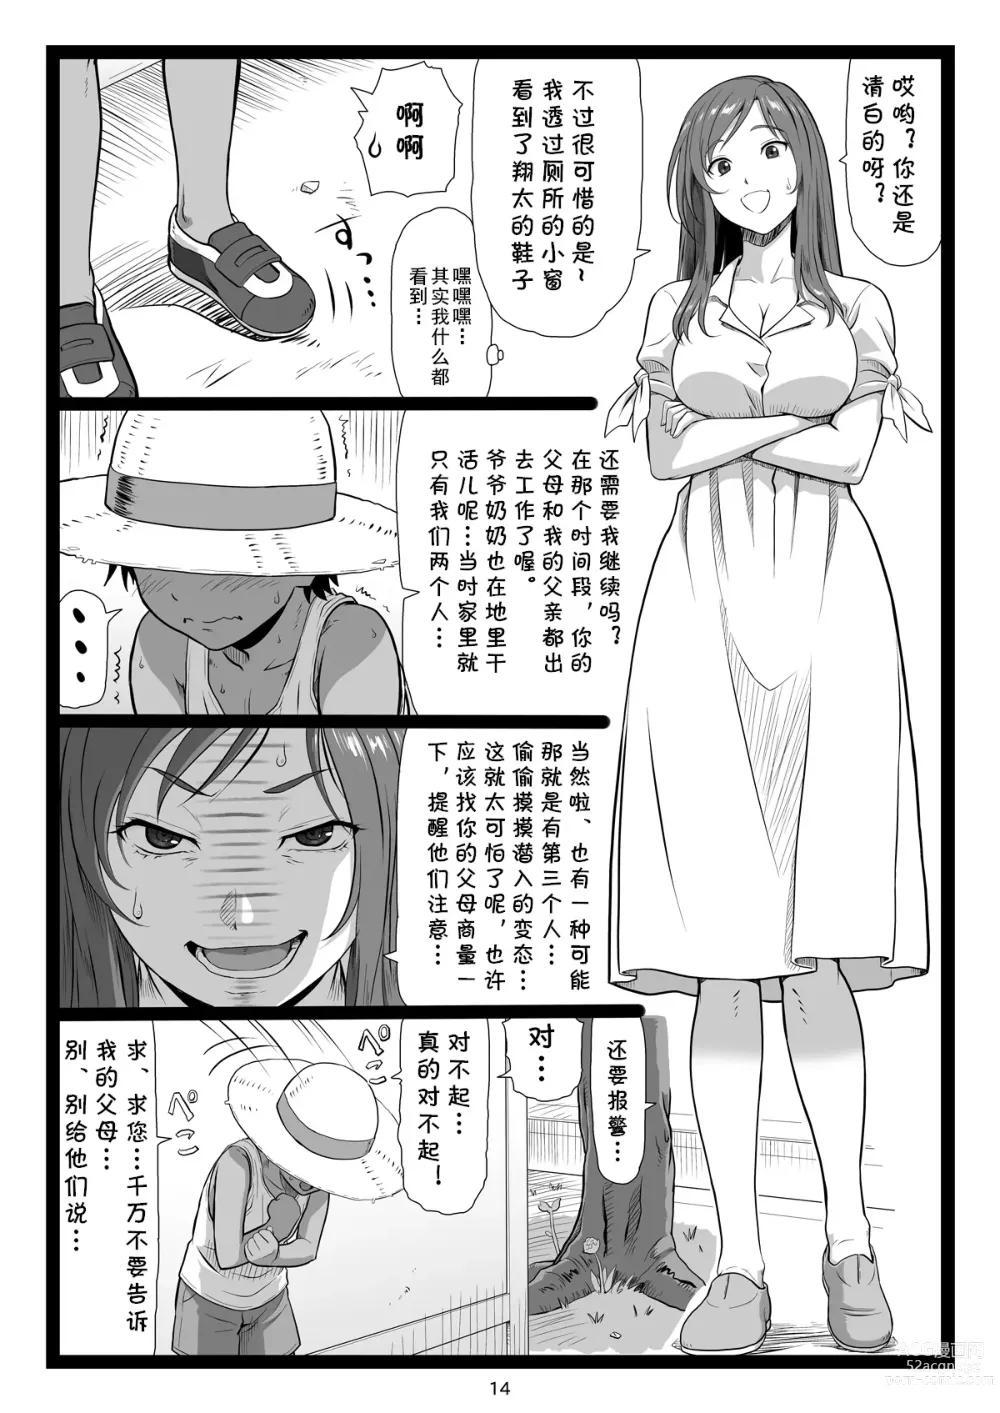 Page 14 of doujinshi Natsuyasumi no Omoide Joukan